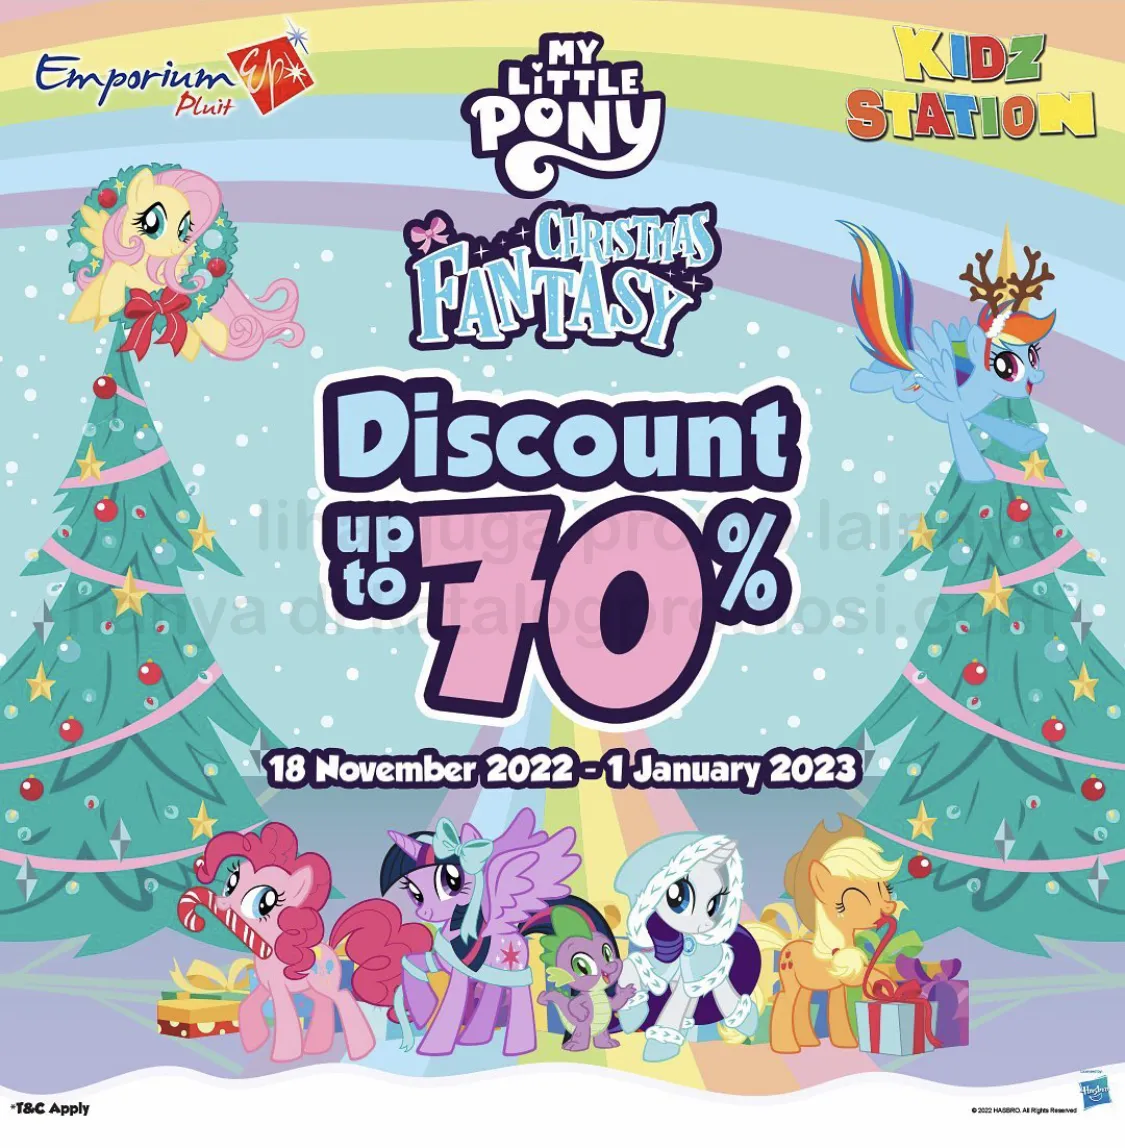 Promo KIDZ STATION My Little Pony Christmas Fantasy di EMPORIUM PLUIT MALL